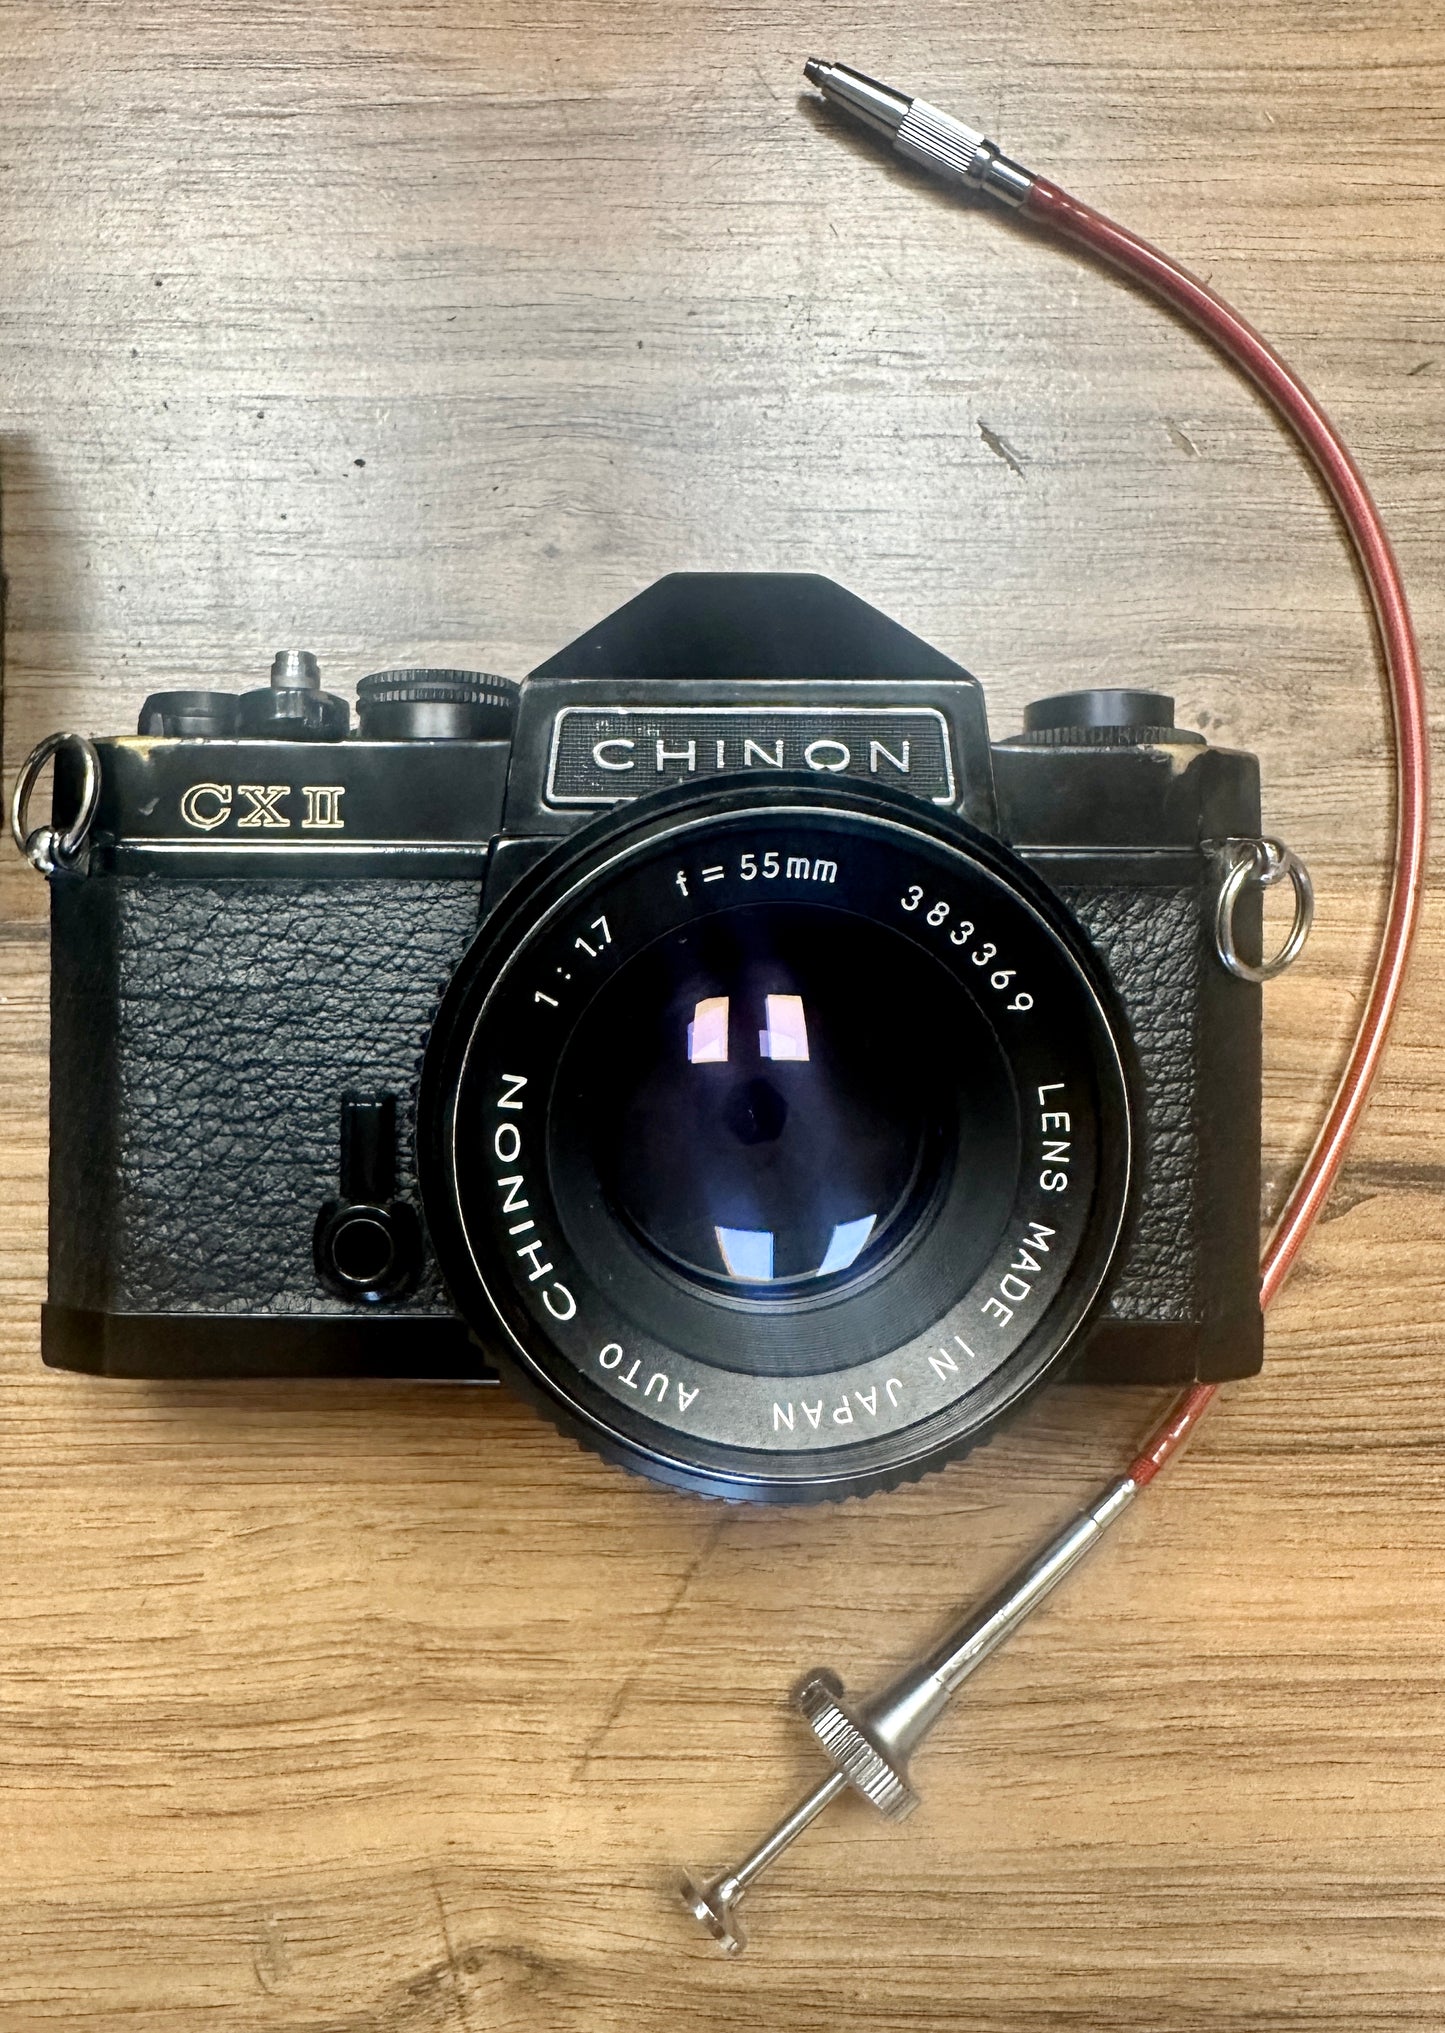 Chinon CX II S# 350586 with Chinon 1:1.7 55mm S# 383369 Lens, Samigon APS Auto Teleplus 2x Lens S# N/A, Samigon Telephoto 135mm 1:2.8 S# 575641